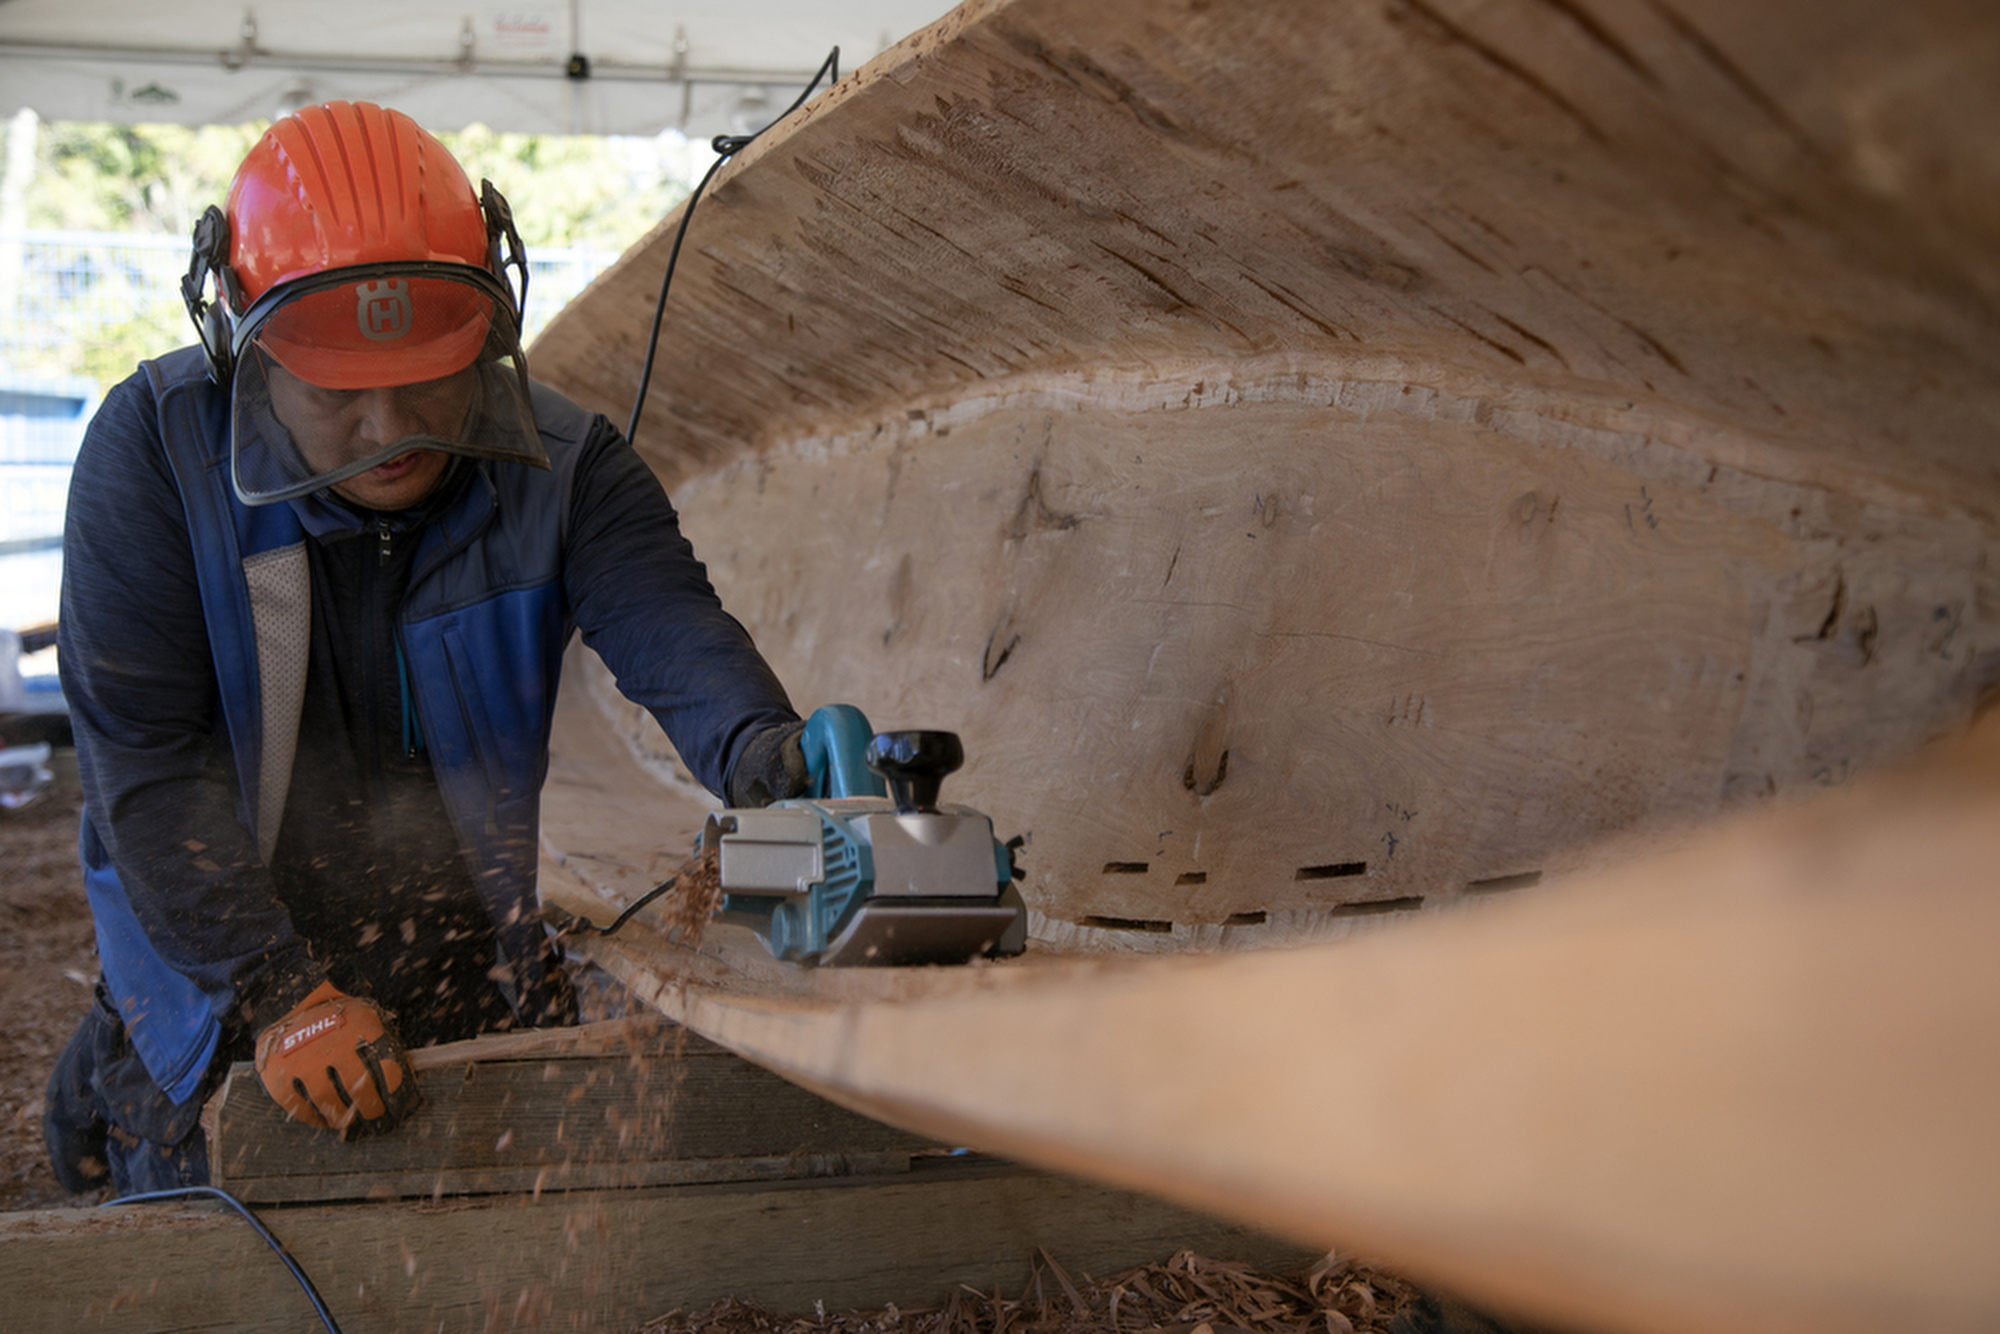 Ray Natraoro sanding the log